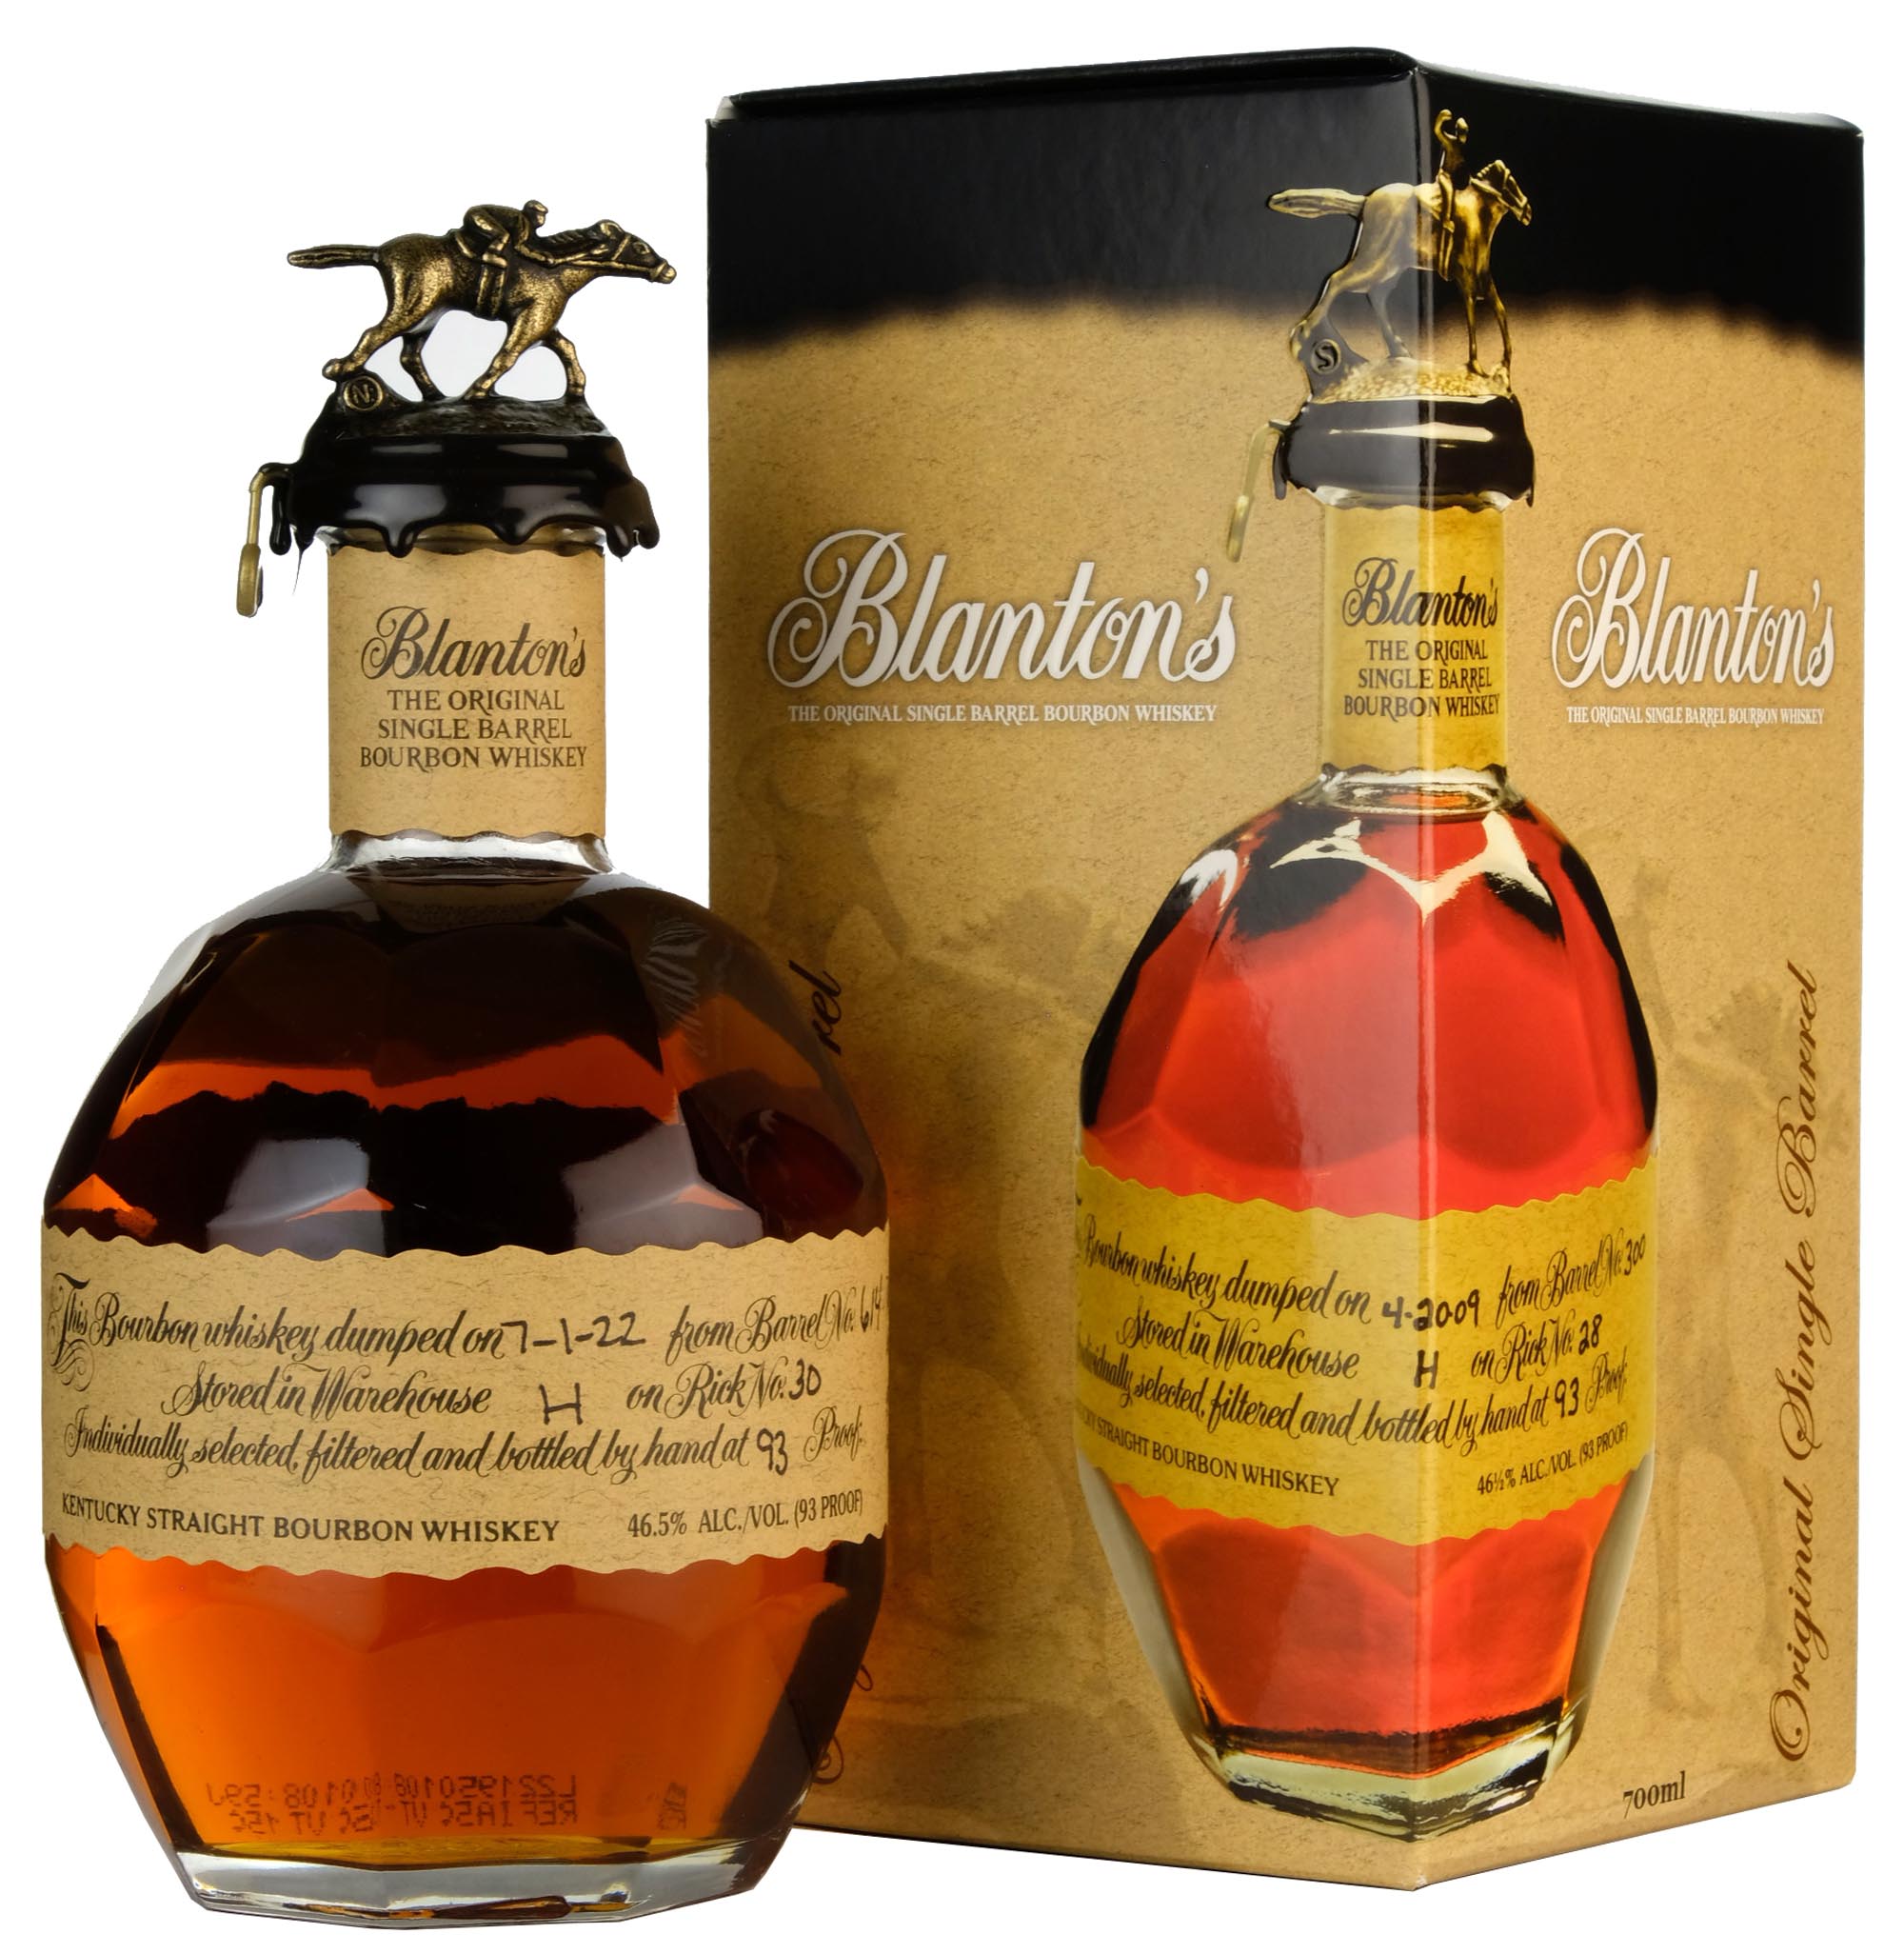 Blanton's Original Single Barrel Kentucky Bourbon Whiskey